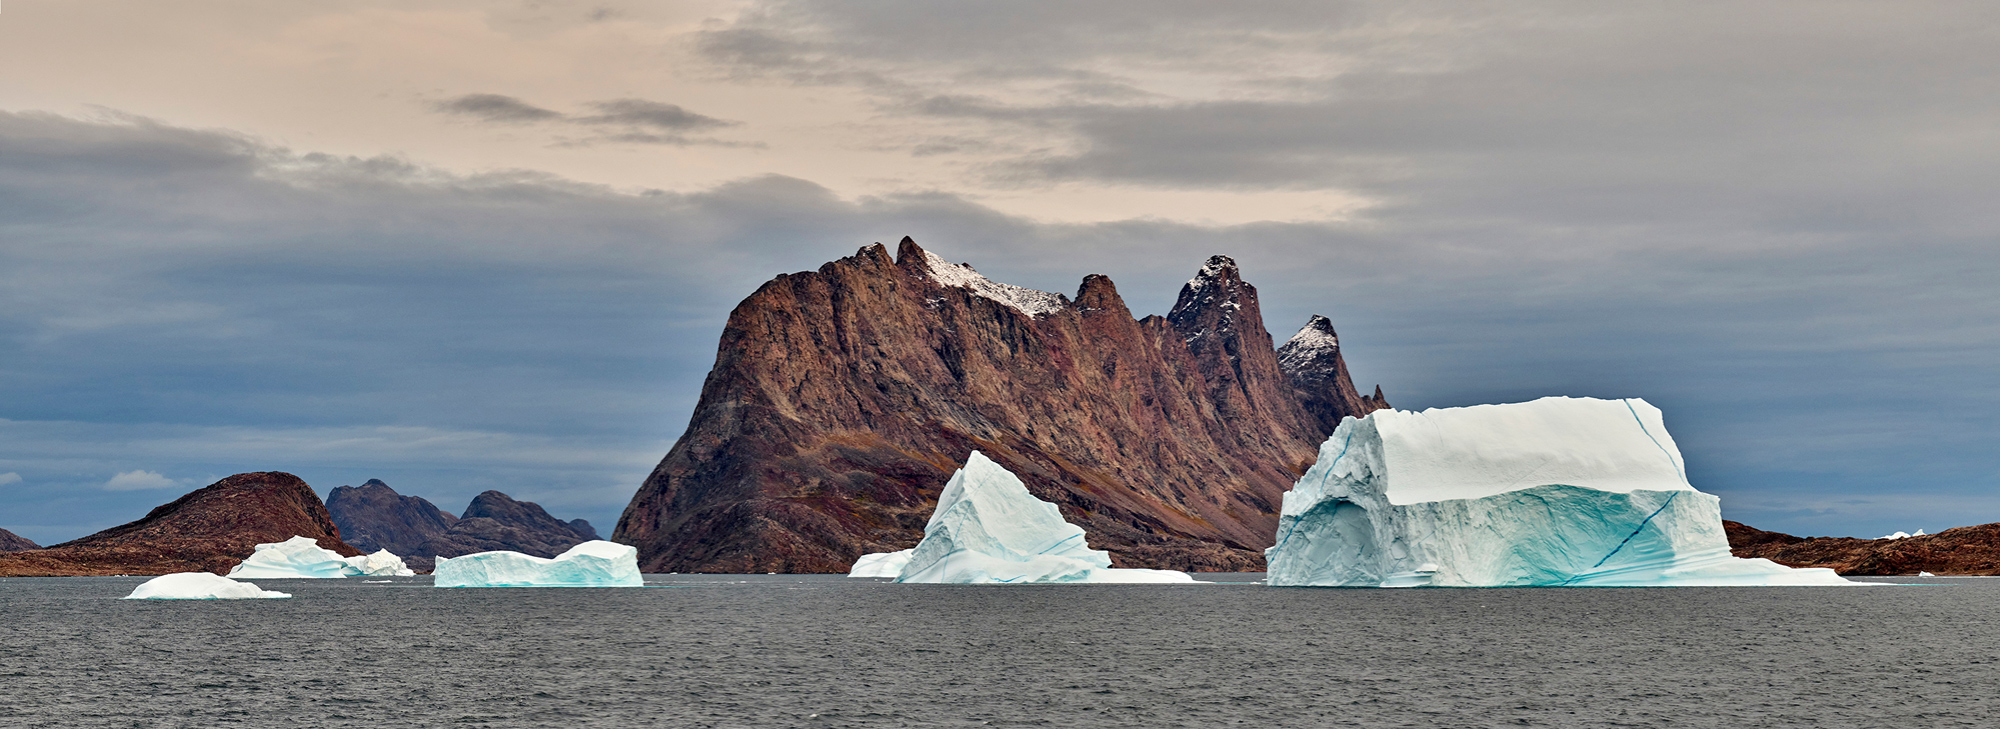 Iceberg in Greenland, single exposure Sony a7r iii